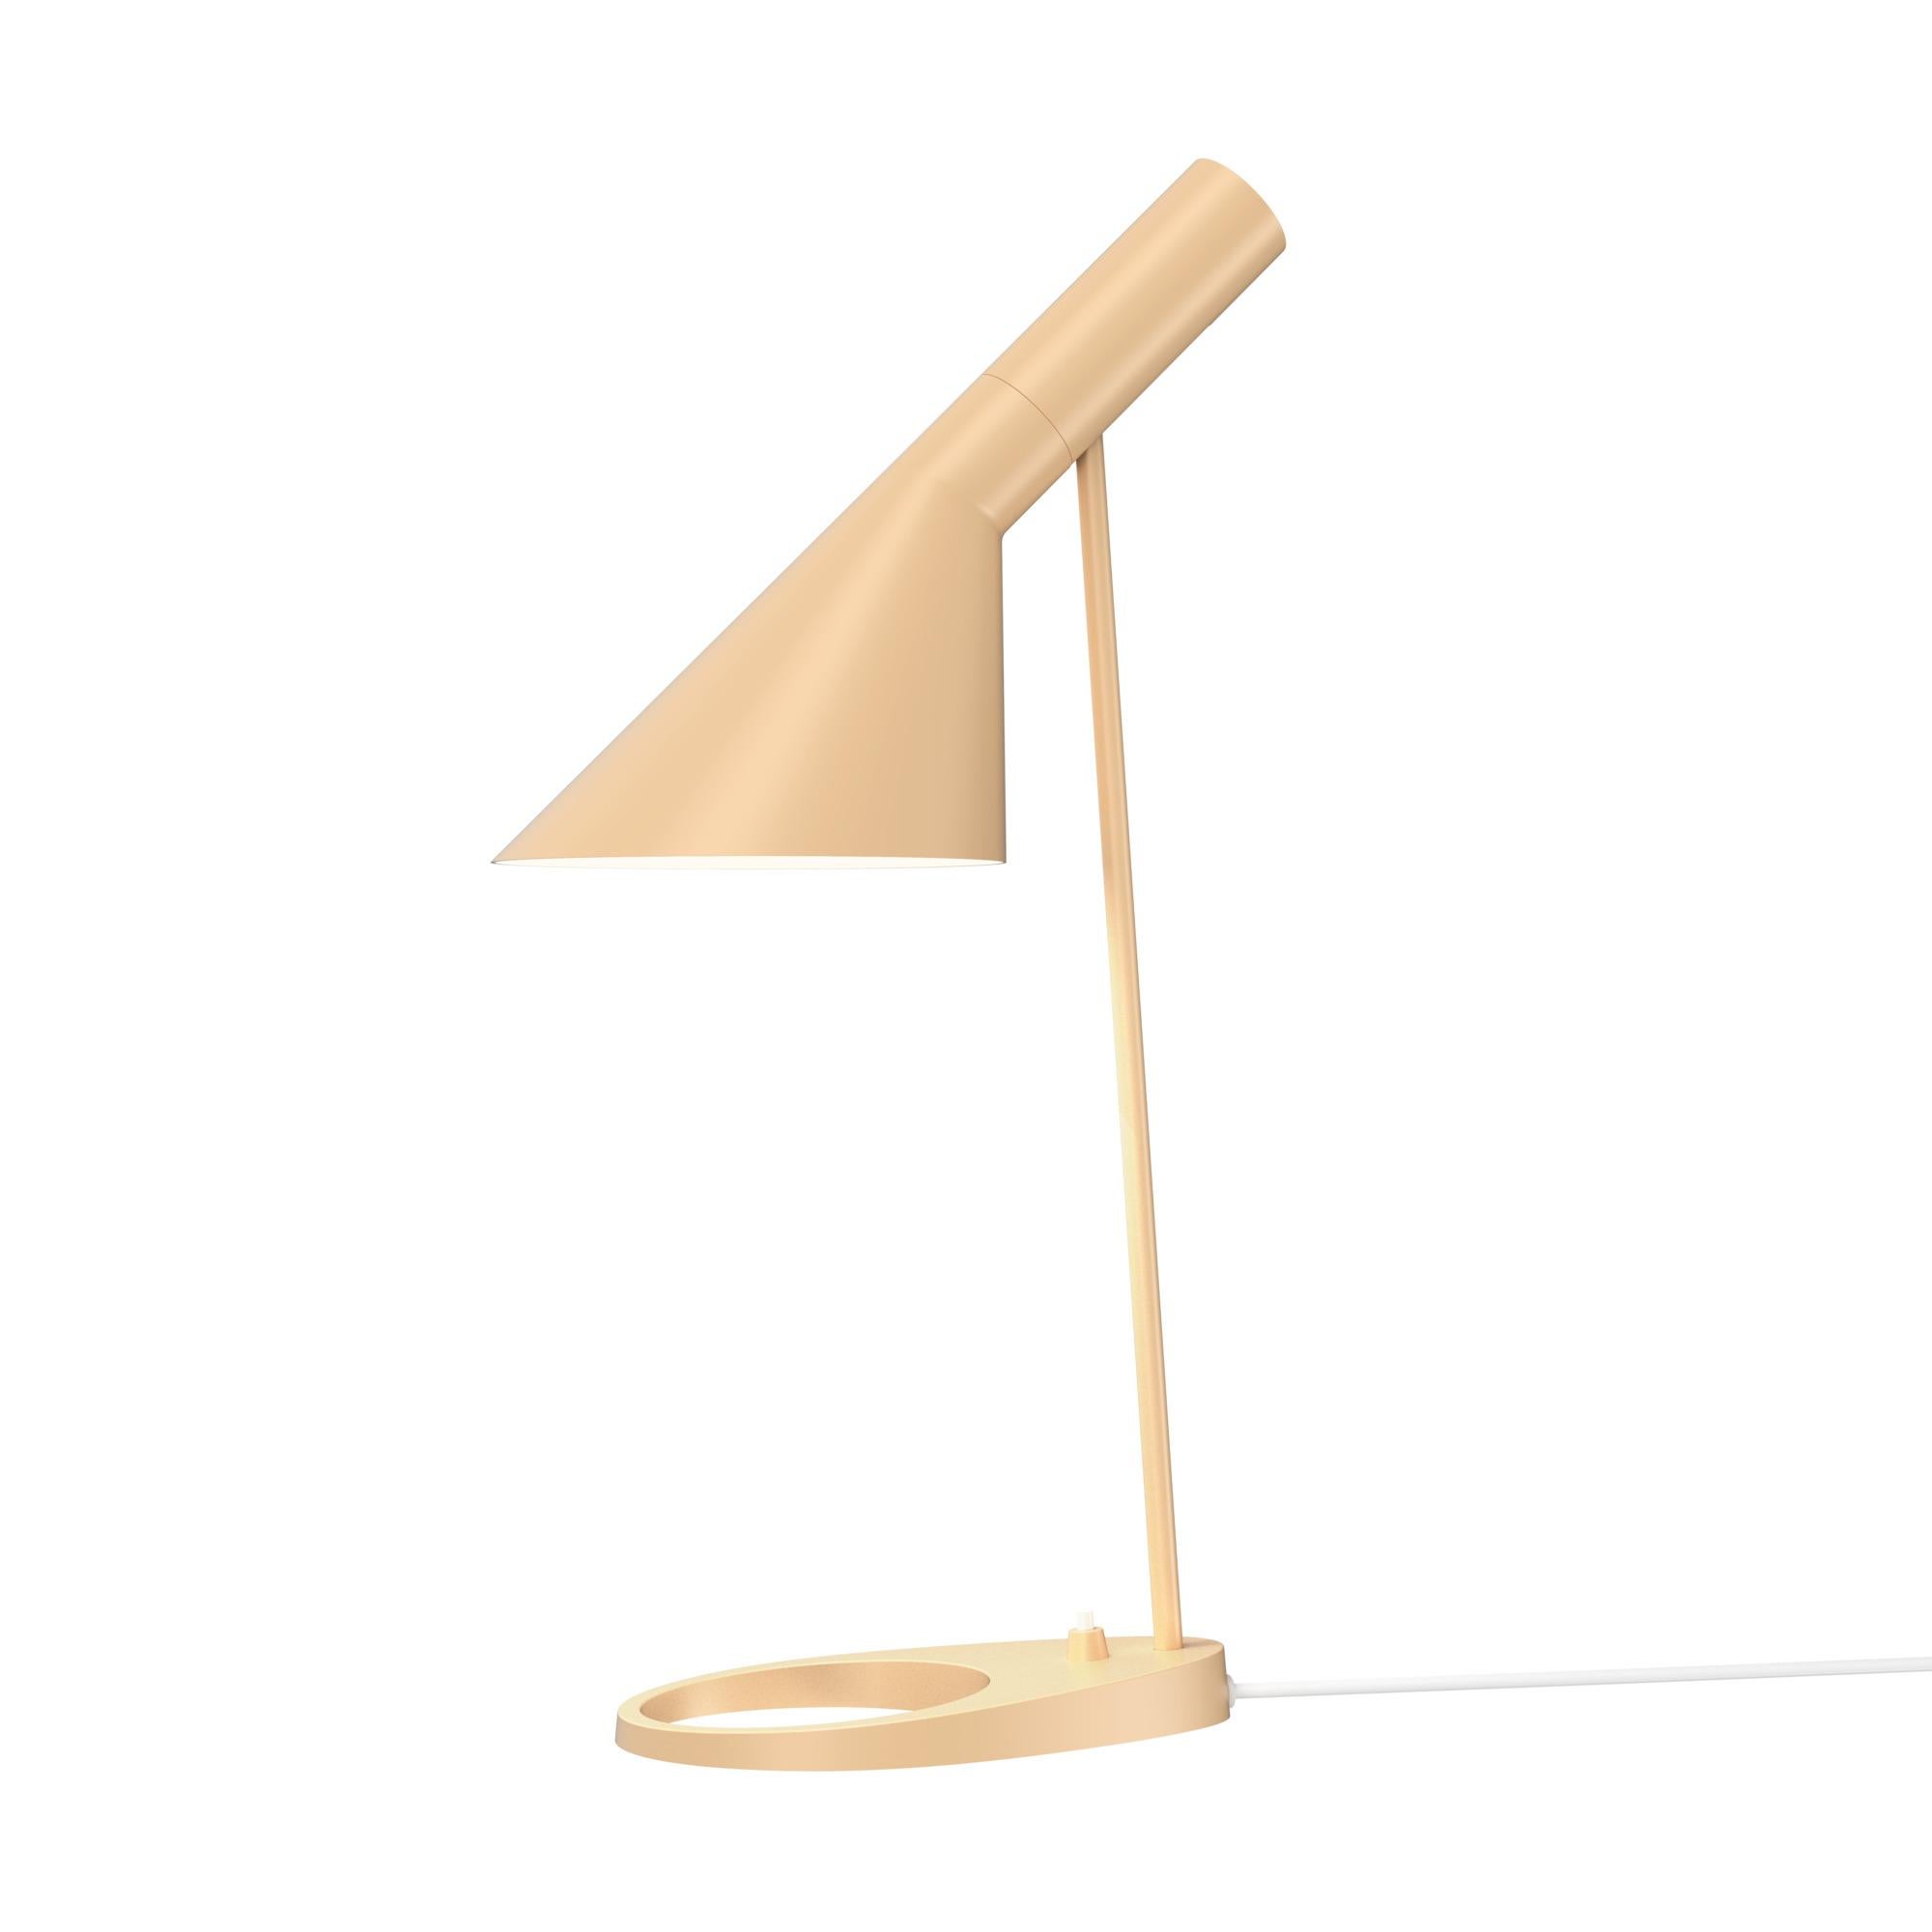 Arne Jacobsen AJ Table Lamp in Stainless Steel for Louis Poulsen For Sale 7